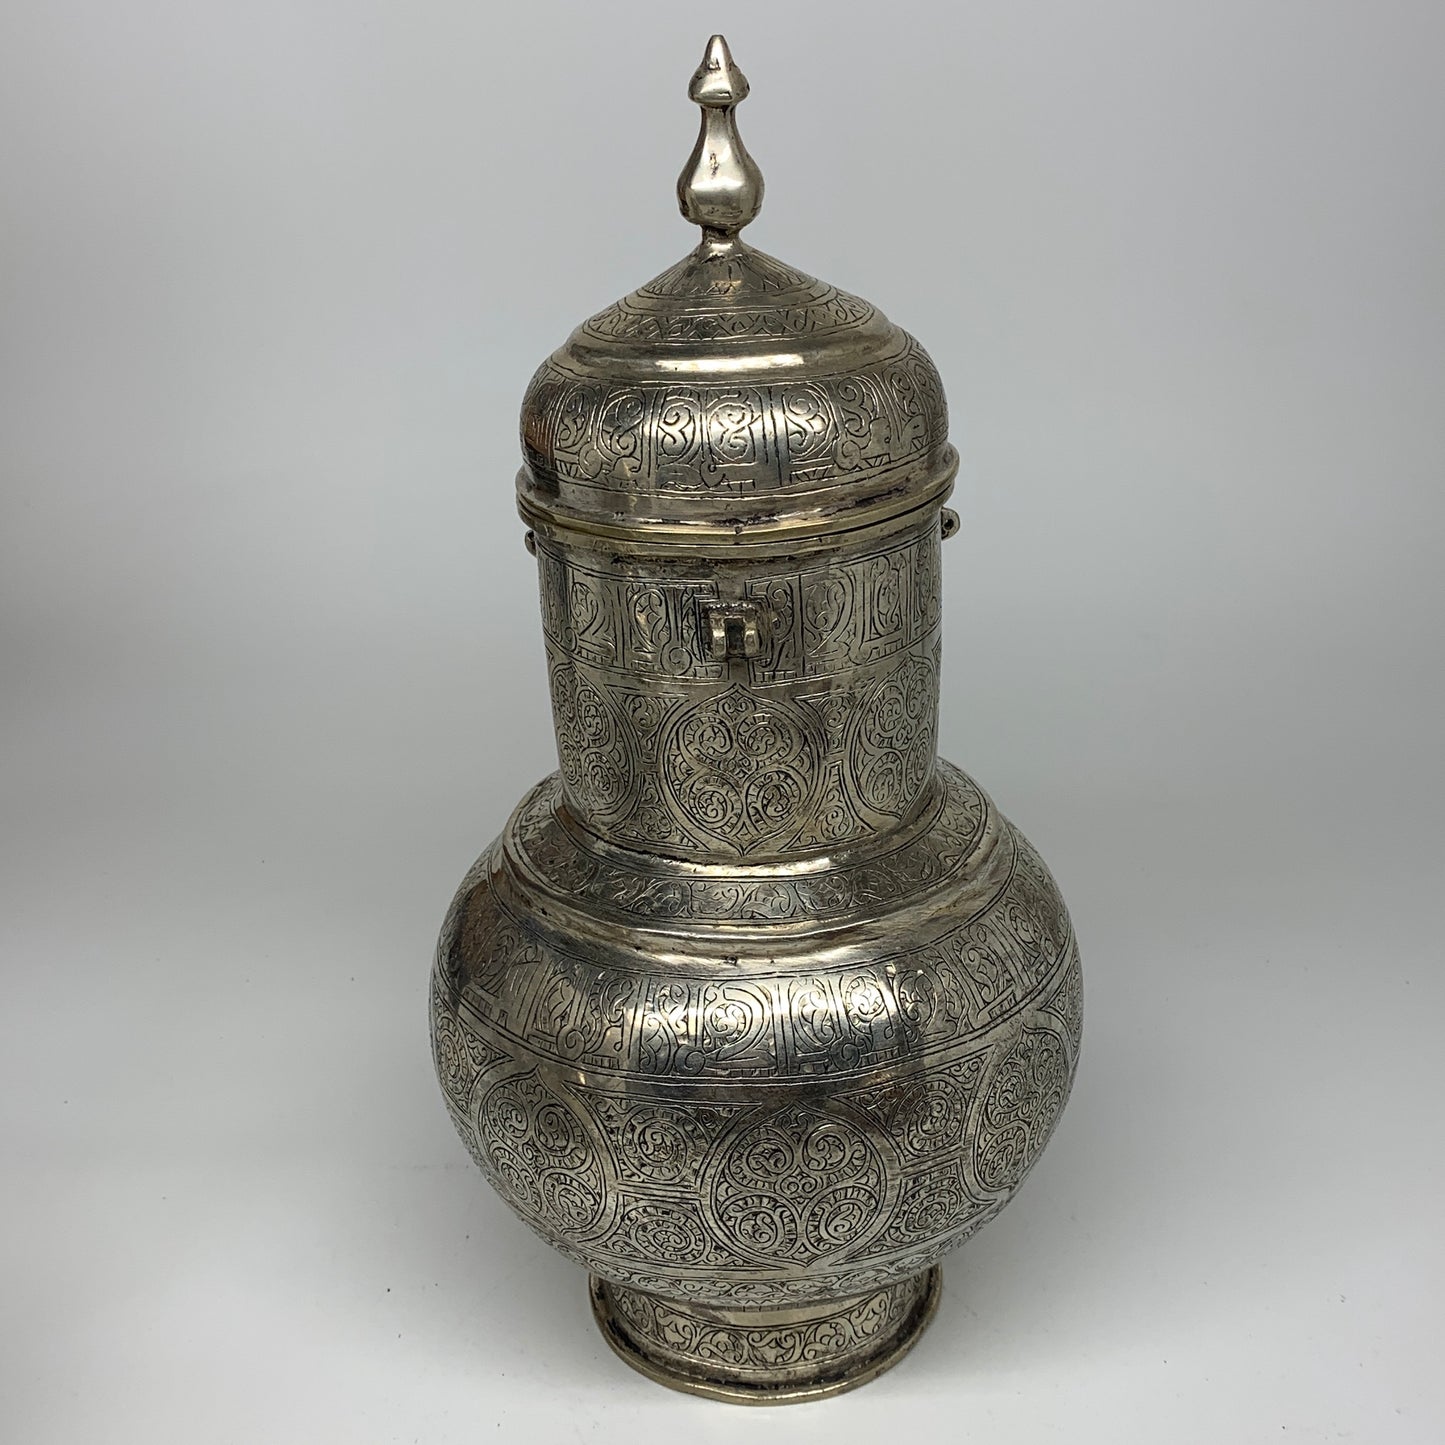 1192g,13.5"x7" Handmade Antique Pitcher Ewer Brass/Copper @Afghanistan, P153